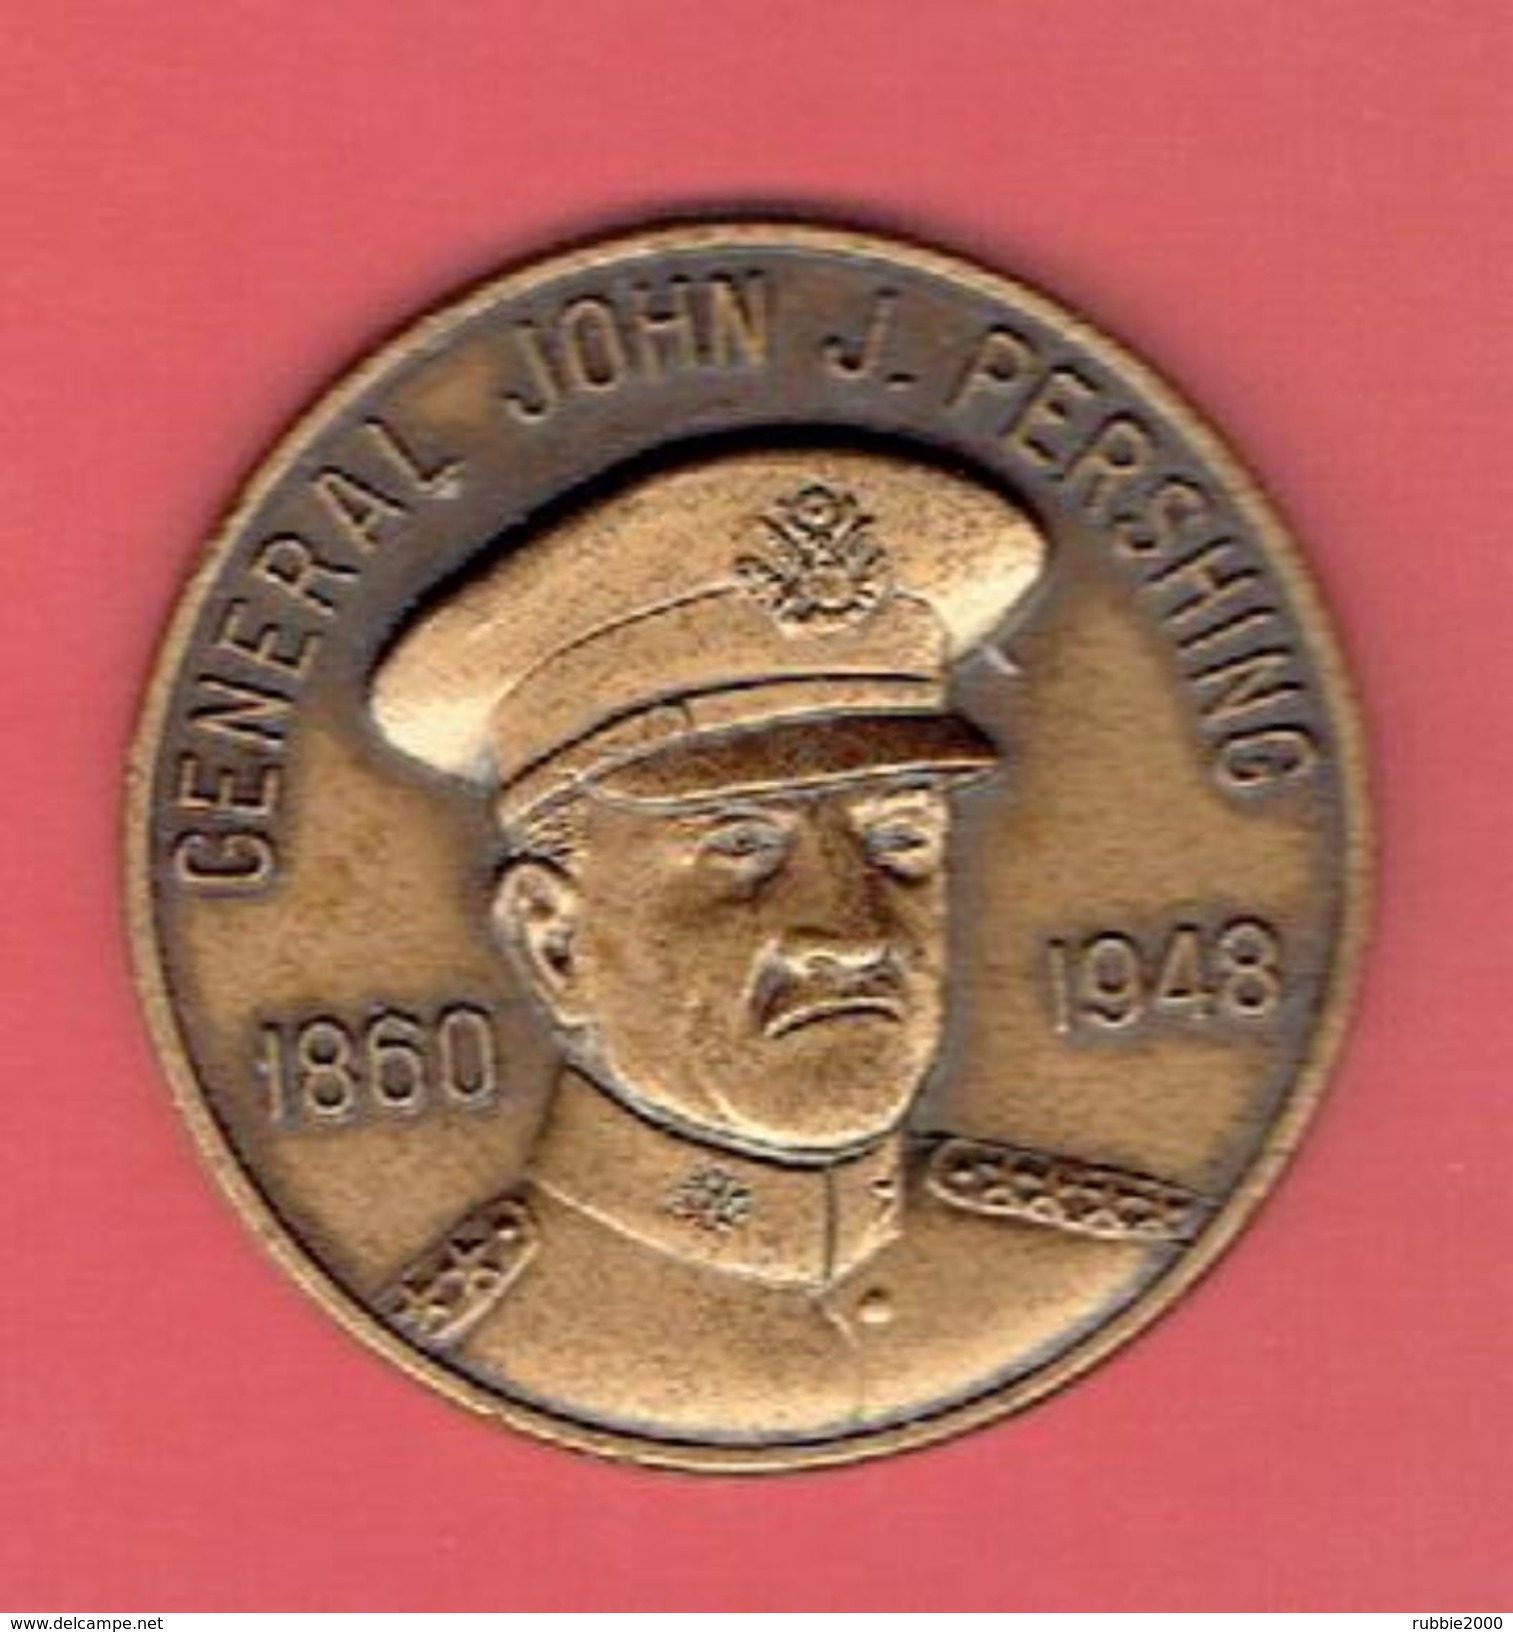 MEDAILLE BRONZE GENERAL JOHN J. PERSHING 1860 1948 GENERAL OF THE ARMIES MUSEE DE LACLEDE AU MISSOURI  GUERRE 1914 1918 - 1914-18